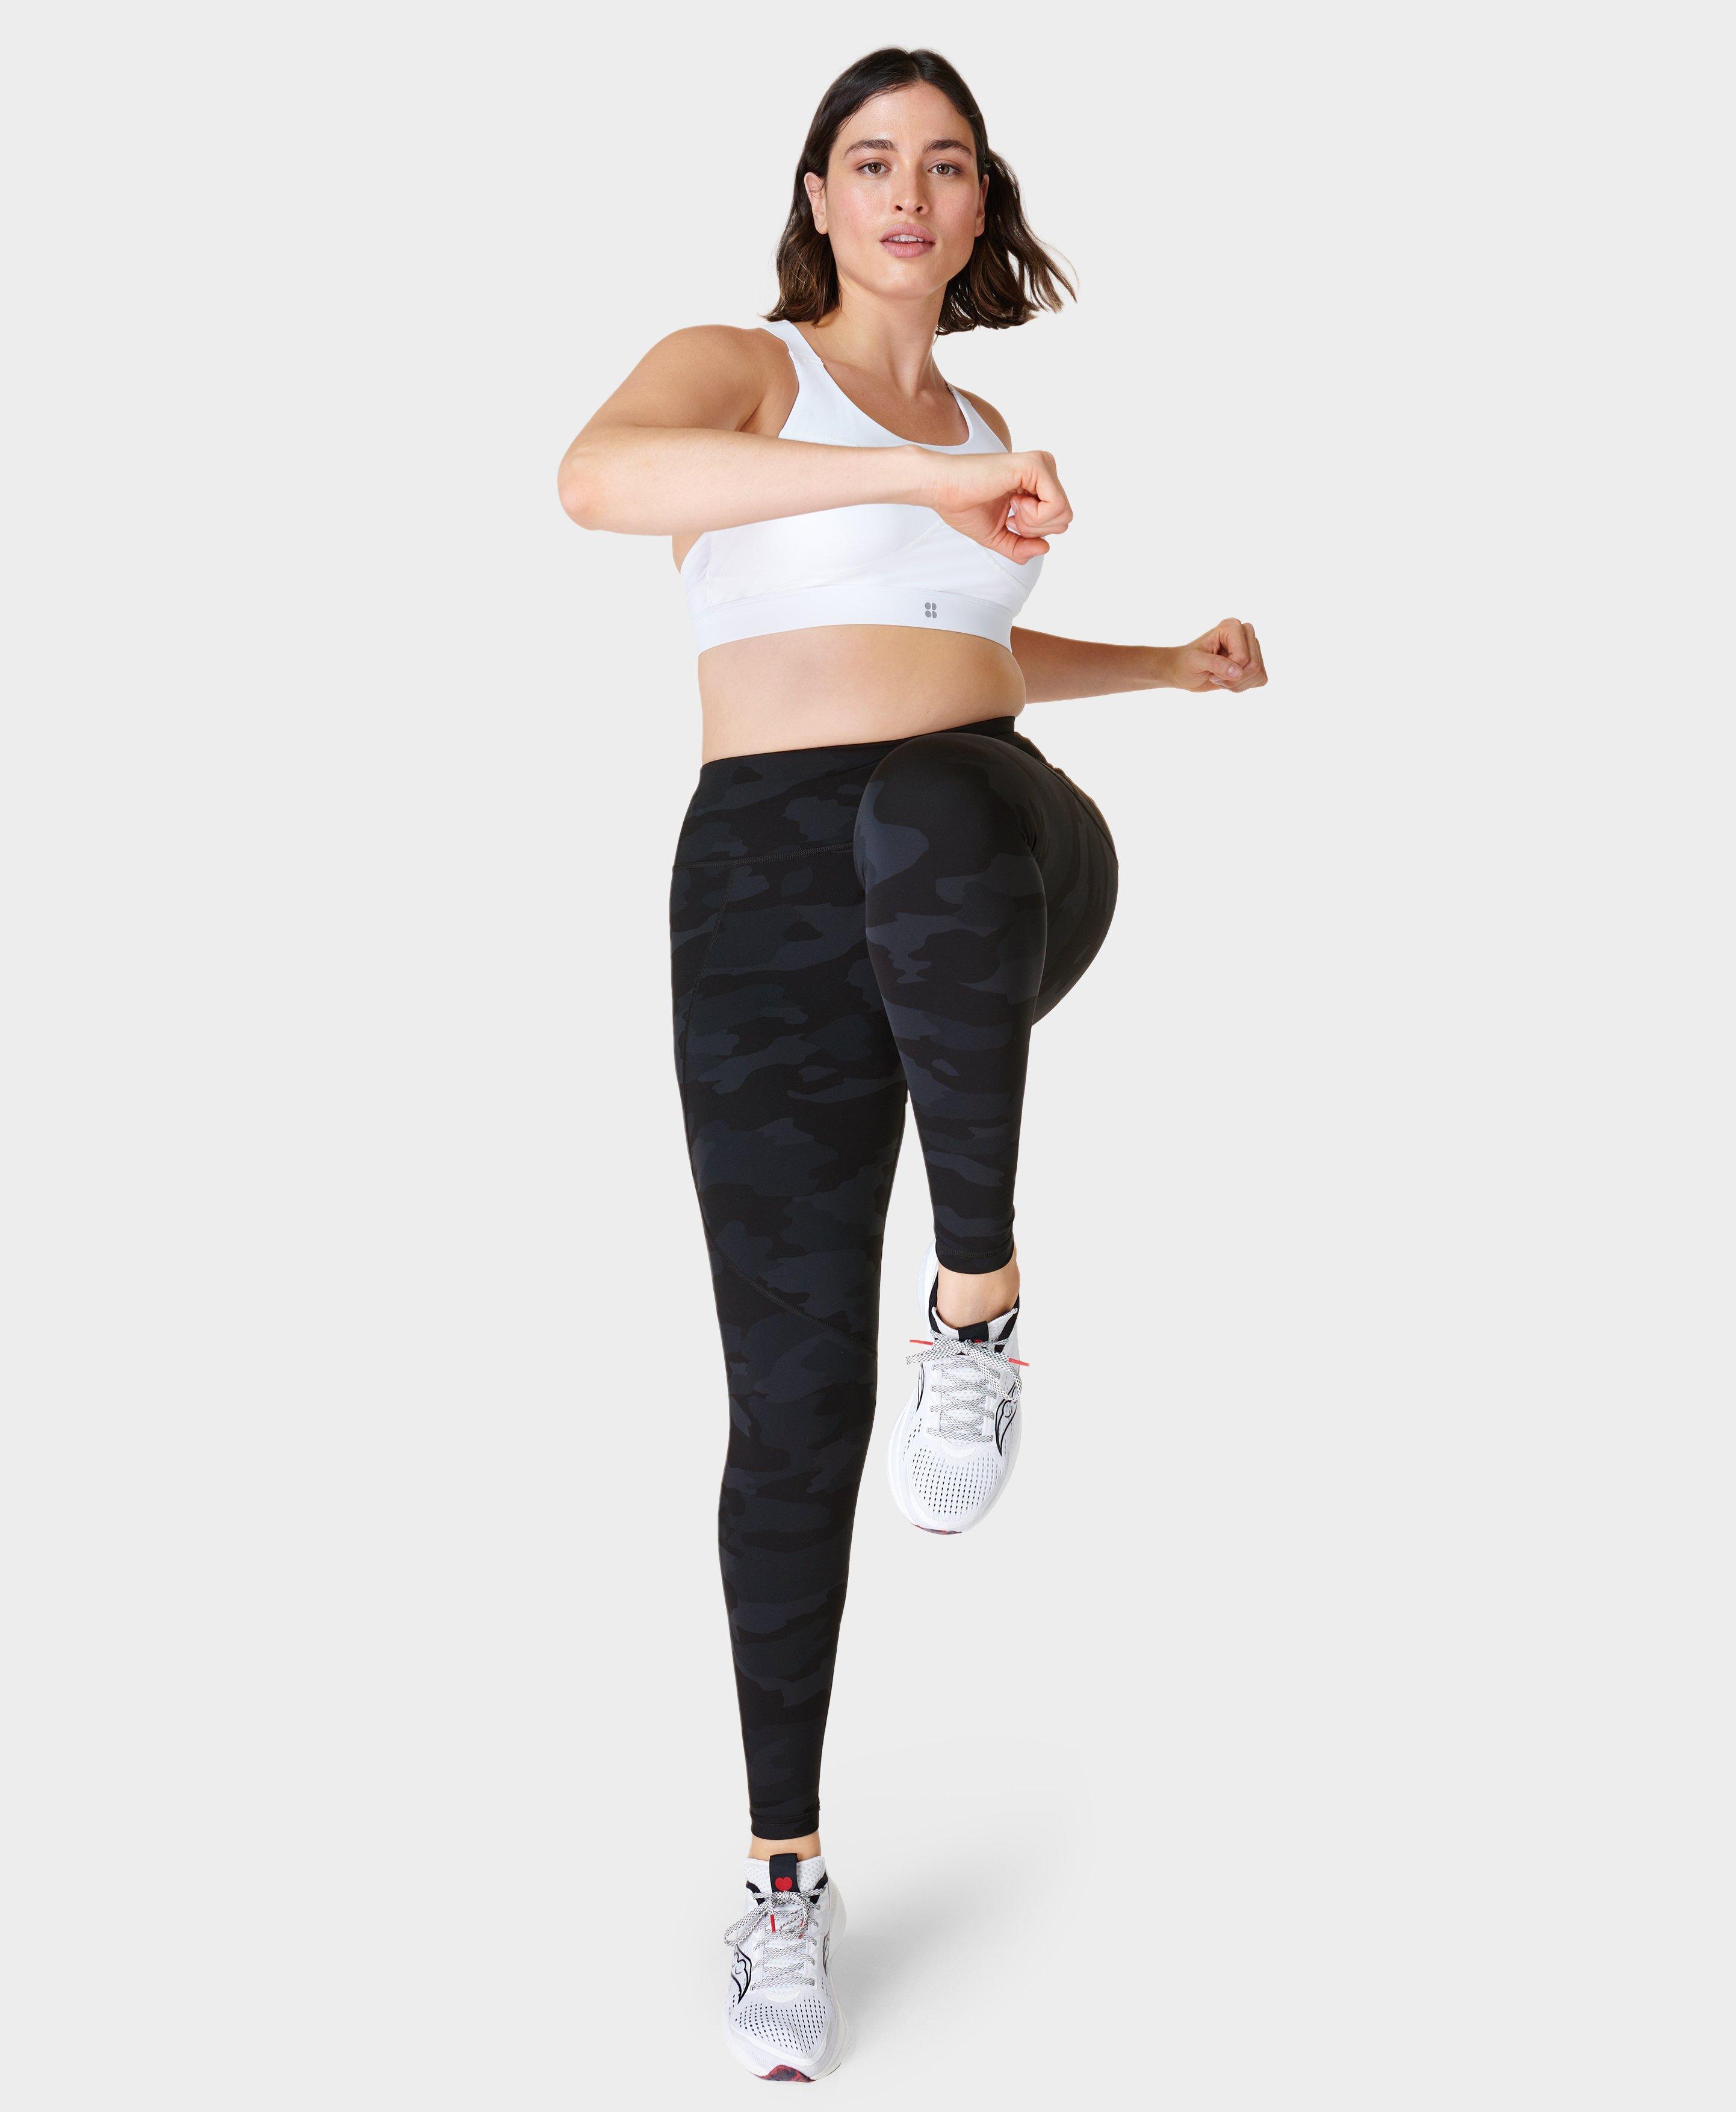 Design BY FRank Mothe. Crazy Color. Leggings : Beautiful #Yoga Pants -  #Exercise Leggings and #Runni…